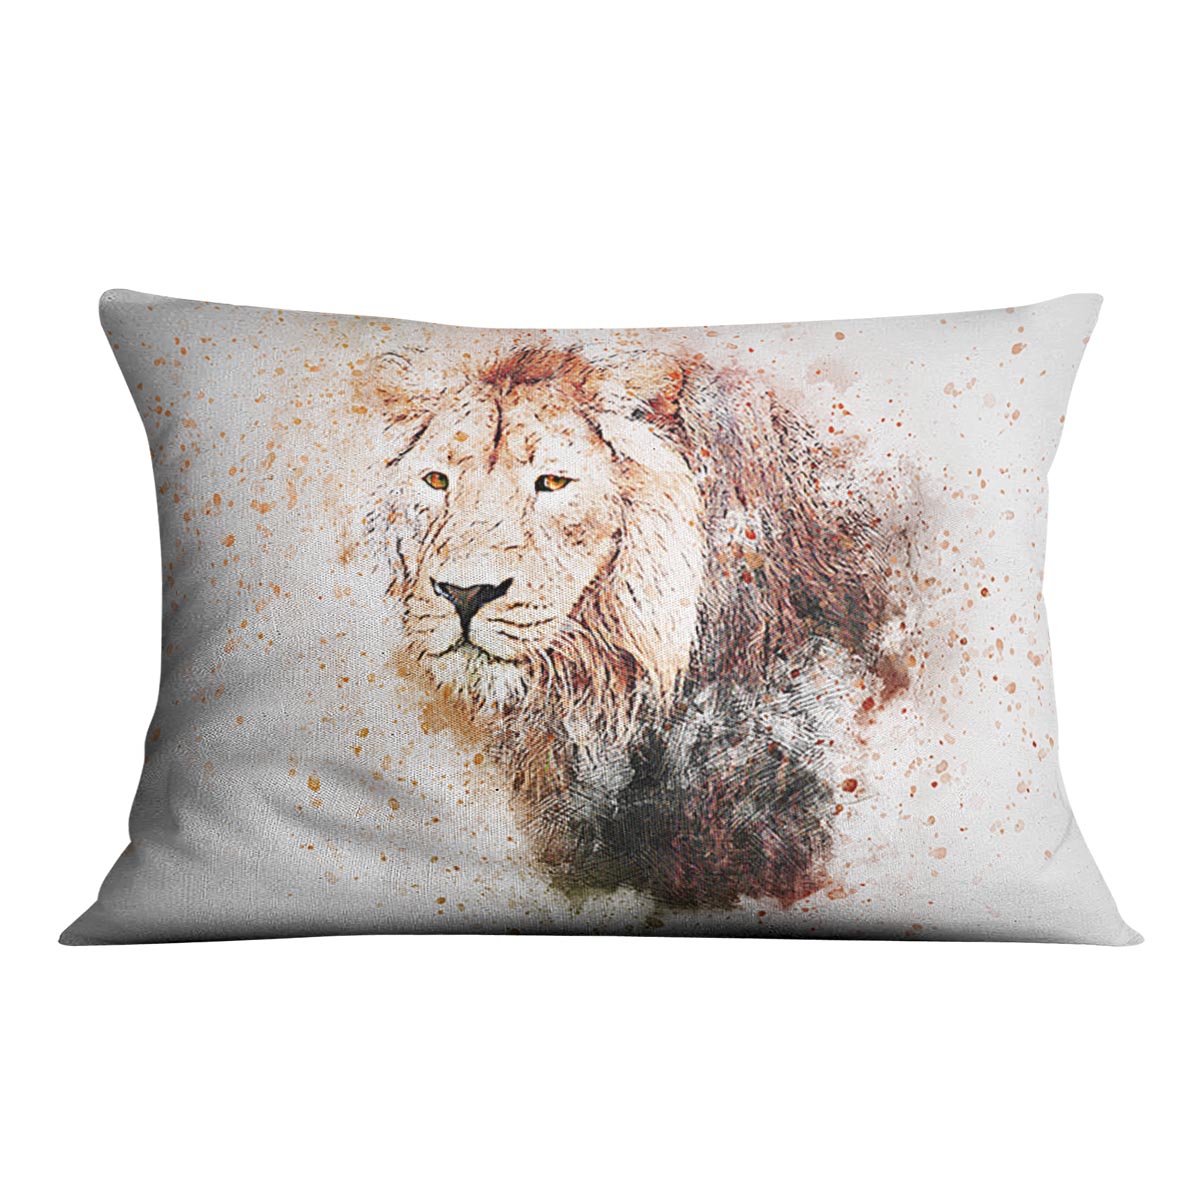 Lion Splatter Cushion